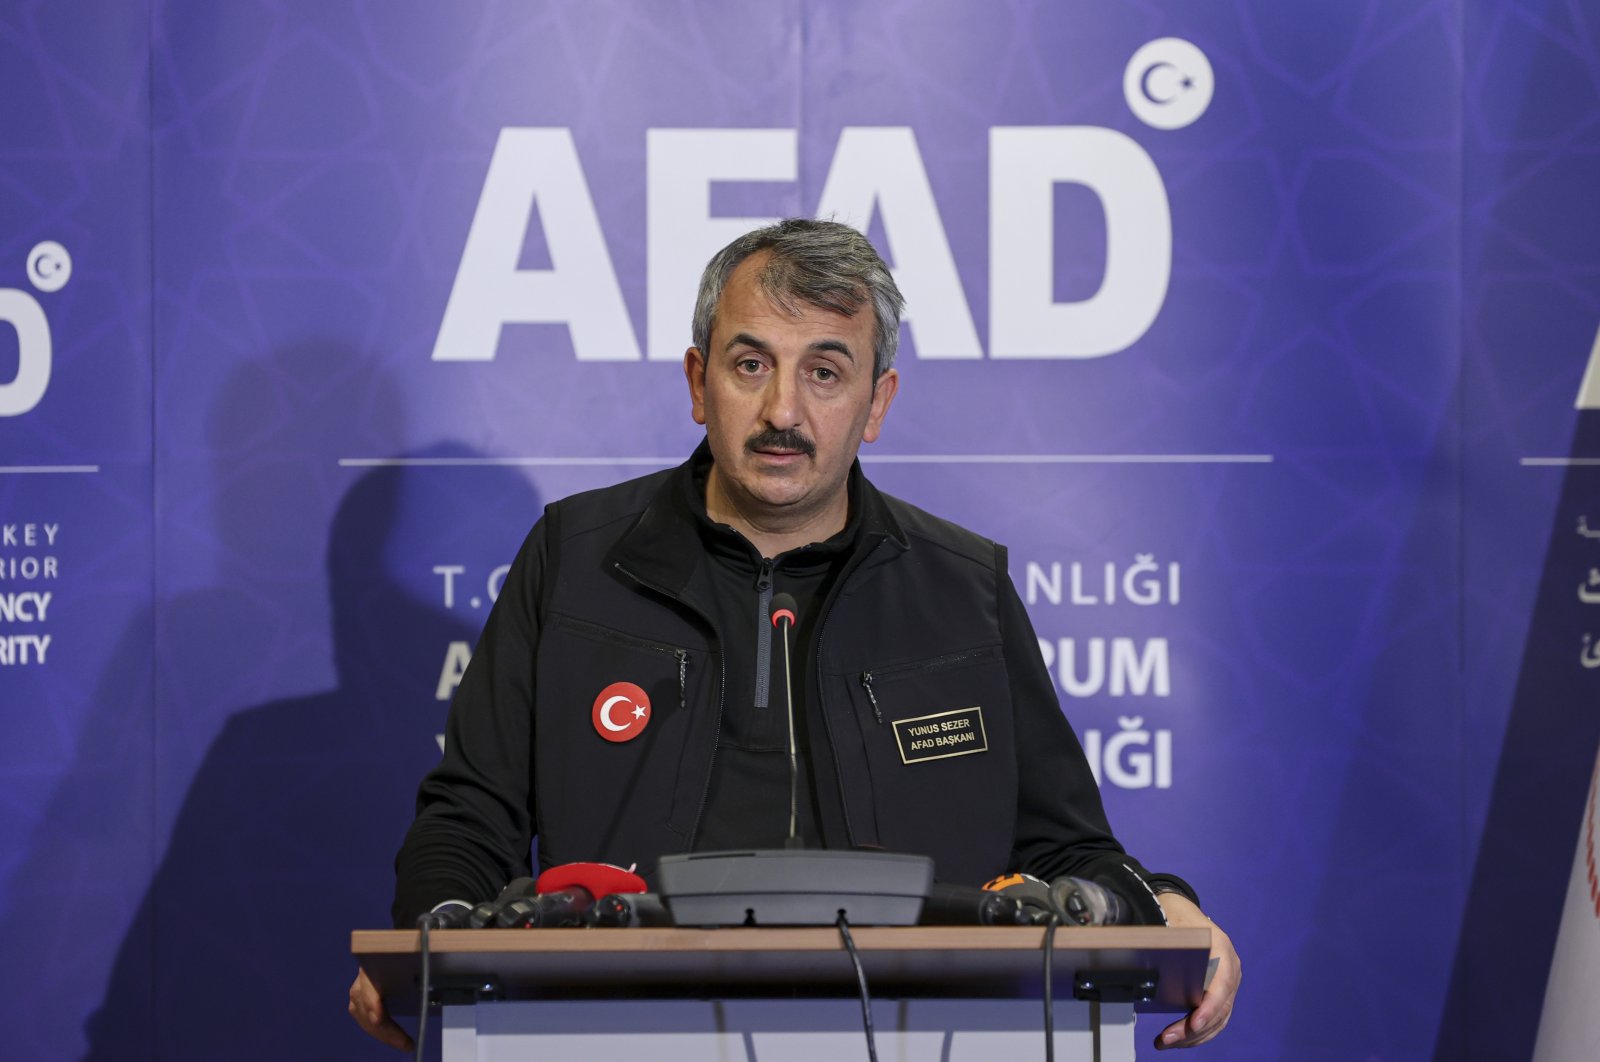 AFAD President Yunus Sezer during a news conference on the Kahramanmaraş earthquakes at the AFAD Emergency Management Center, Ankara, Türkiye, Feb. 7, 2022. (AA Photo)